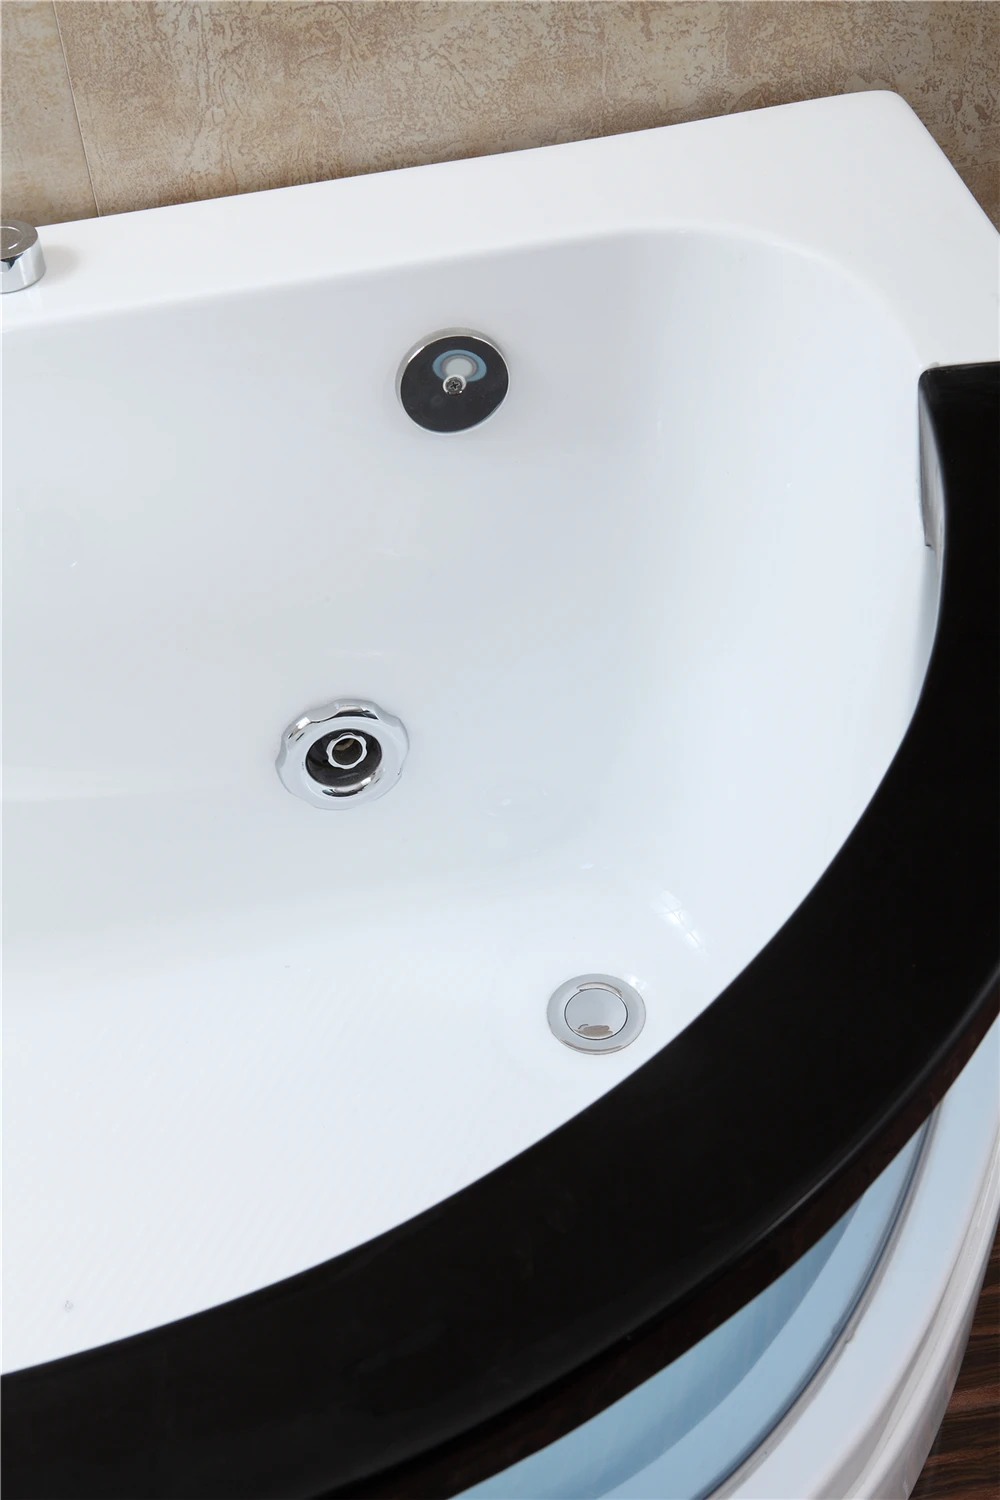 Corner modern massage whirlpool bath tub multi functional indoor bathroom acrylic bathtub